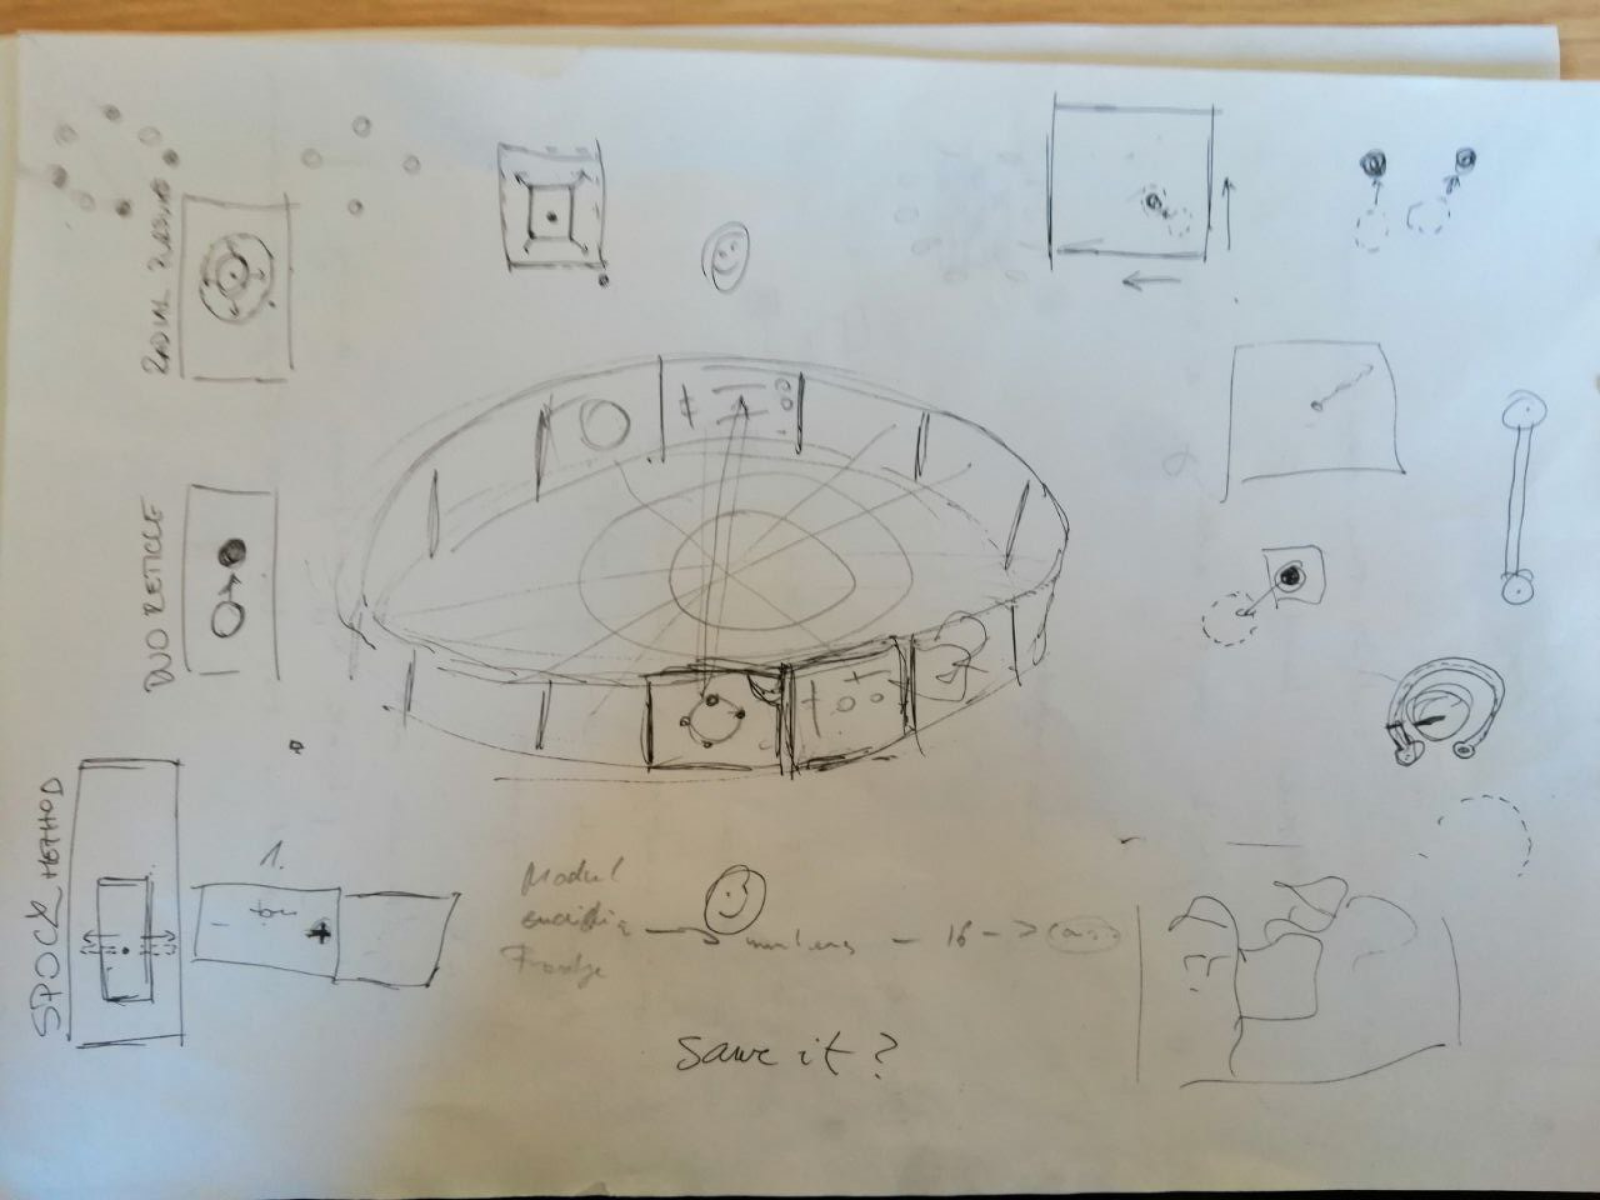 Hand-draw sketch of circular app interface